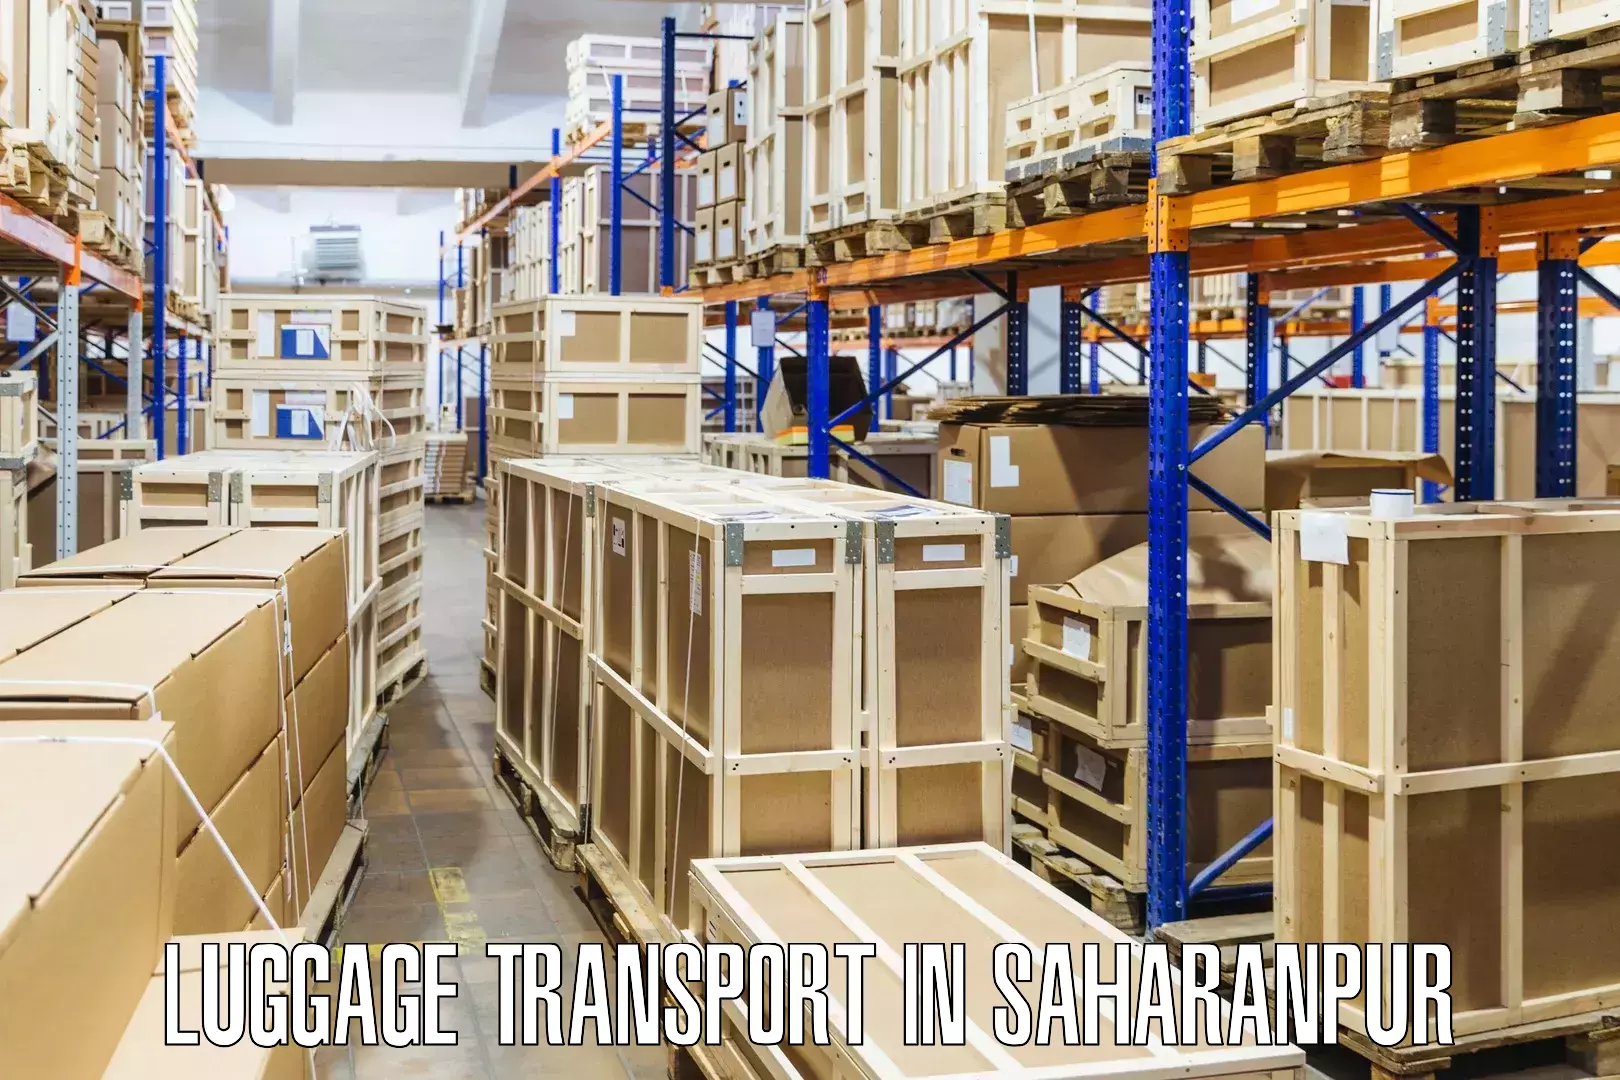 Multi-destination luggage transport in Saharanpur